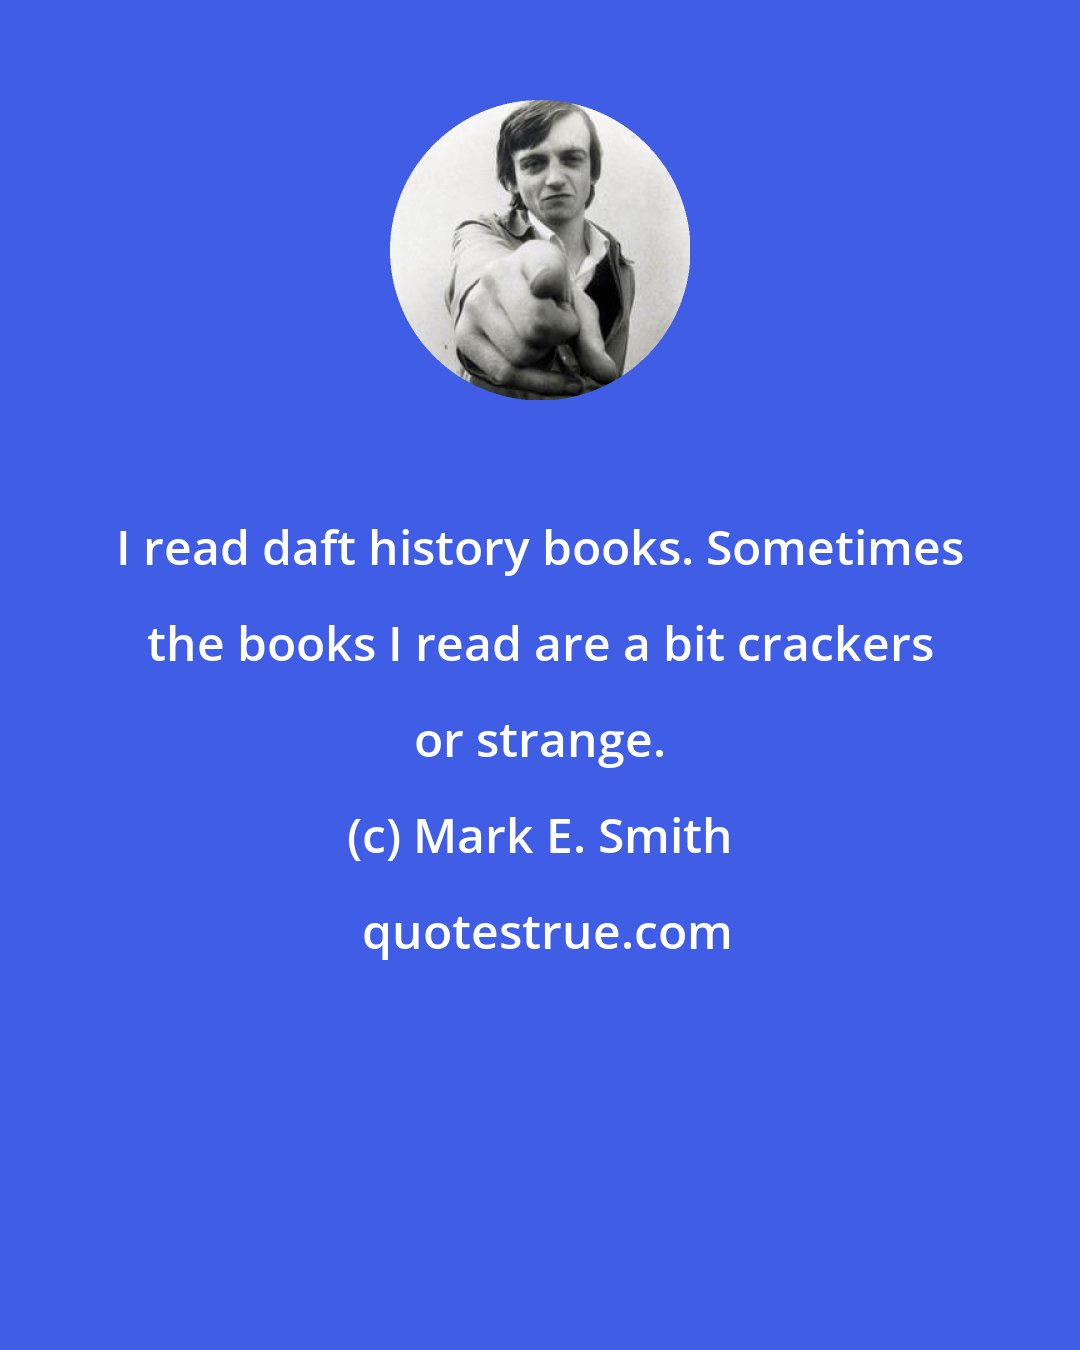 Mark E. Smith: I read daft history books. Sometimes the books I read are a bit crackers or strange.